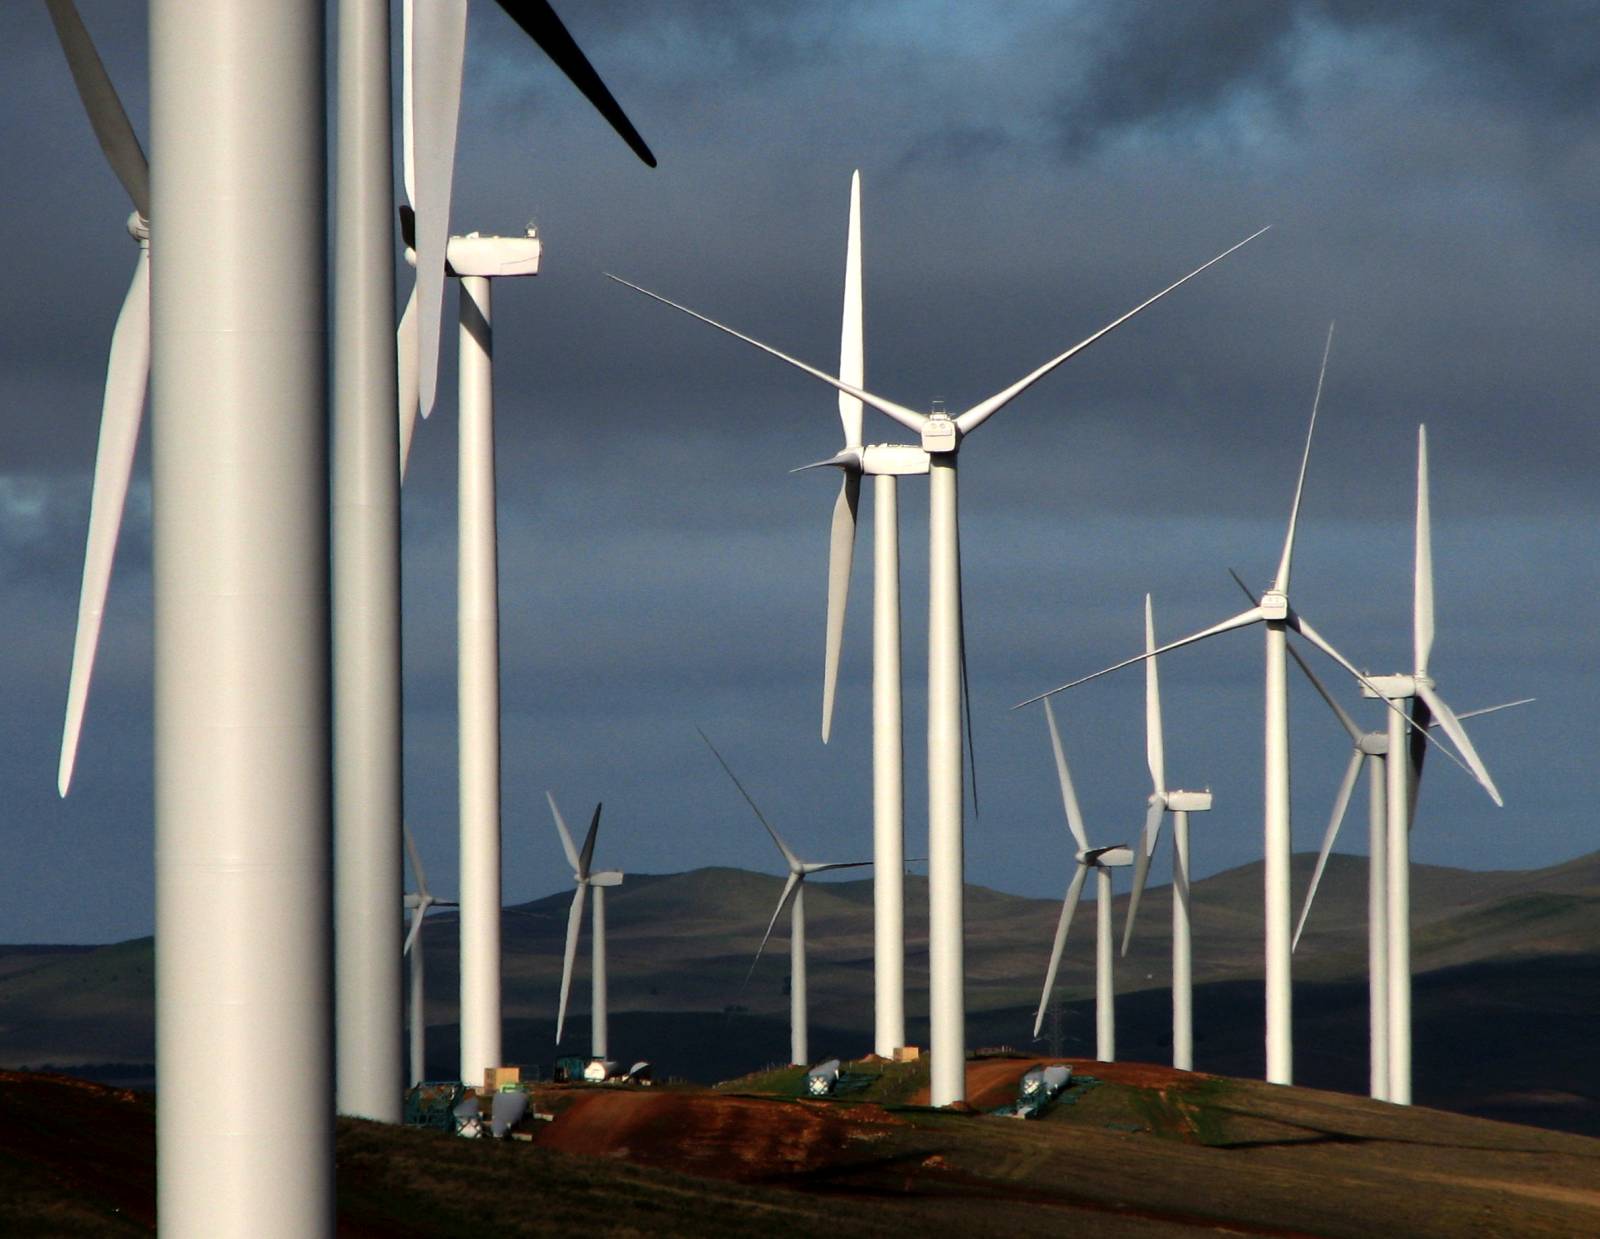 Blue Ridge windfarm in Mid North South Australia - the centre of new renewable energy in Australia.